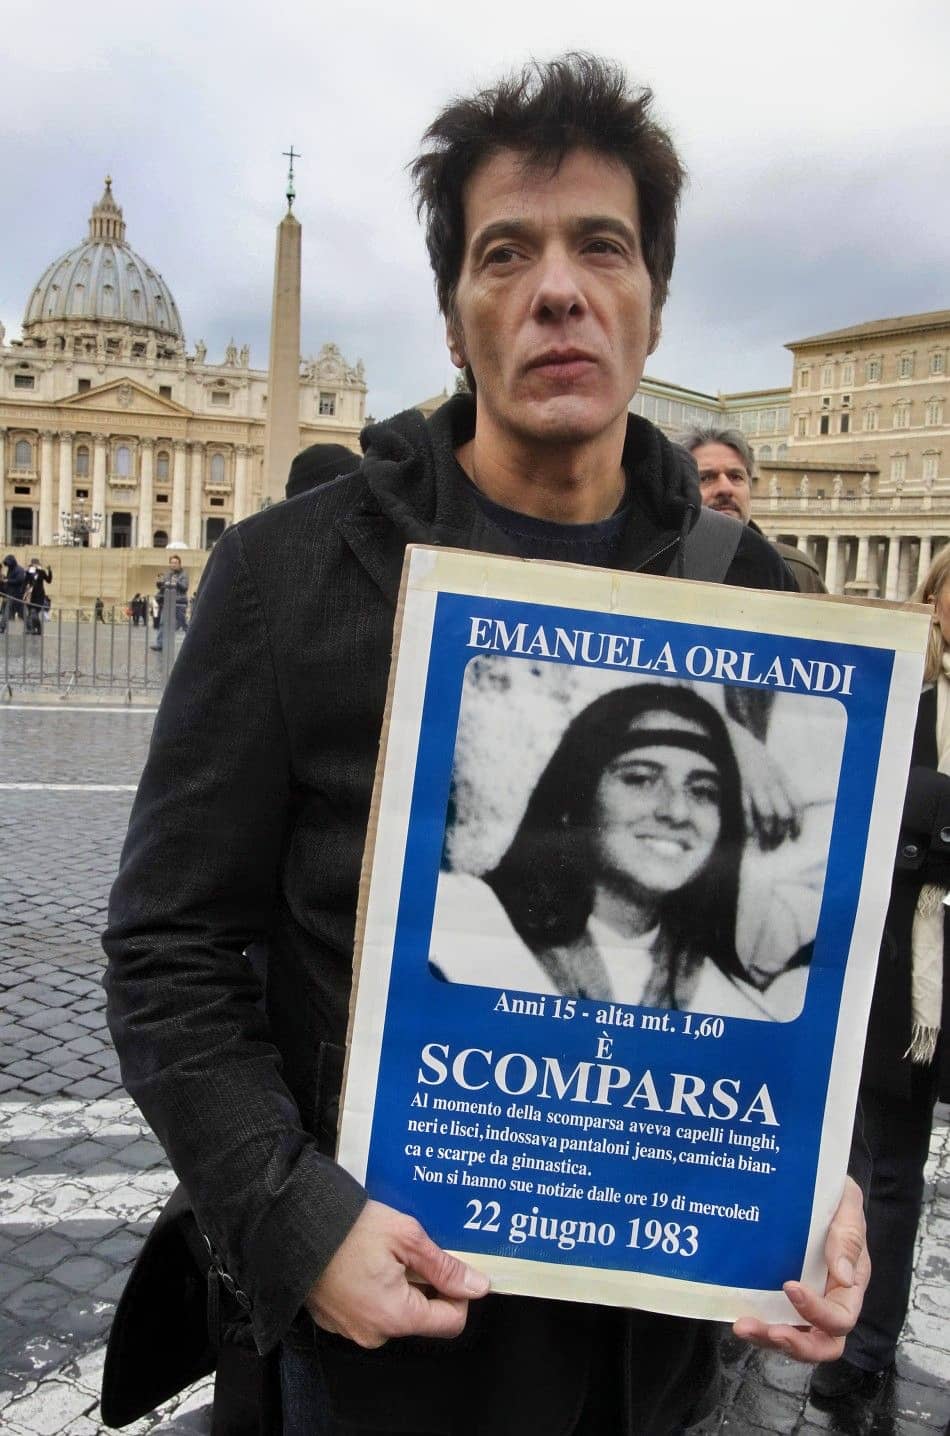 Missing Emanuela Orlandi and the Vatican, InfoMistico.com